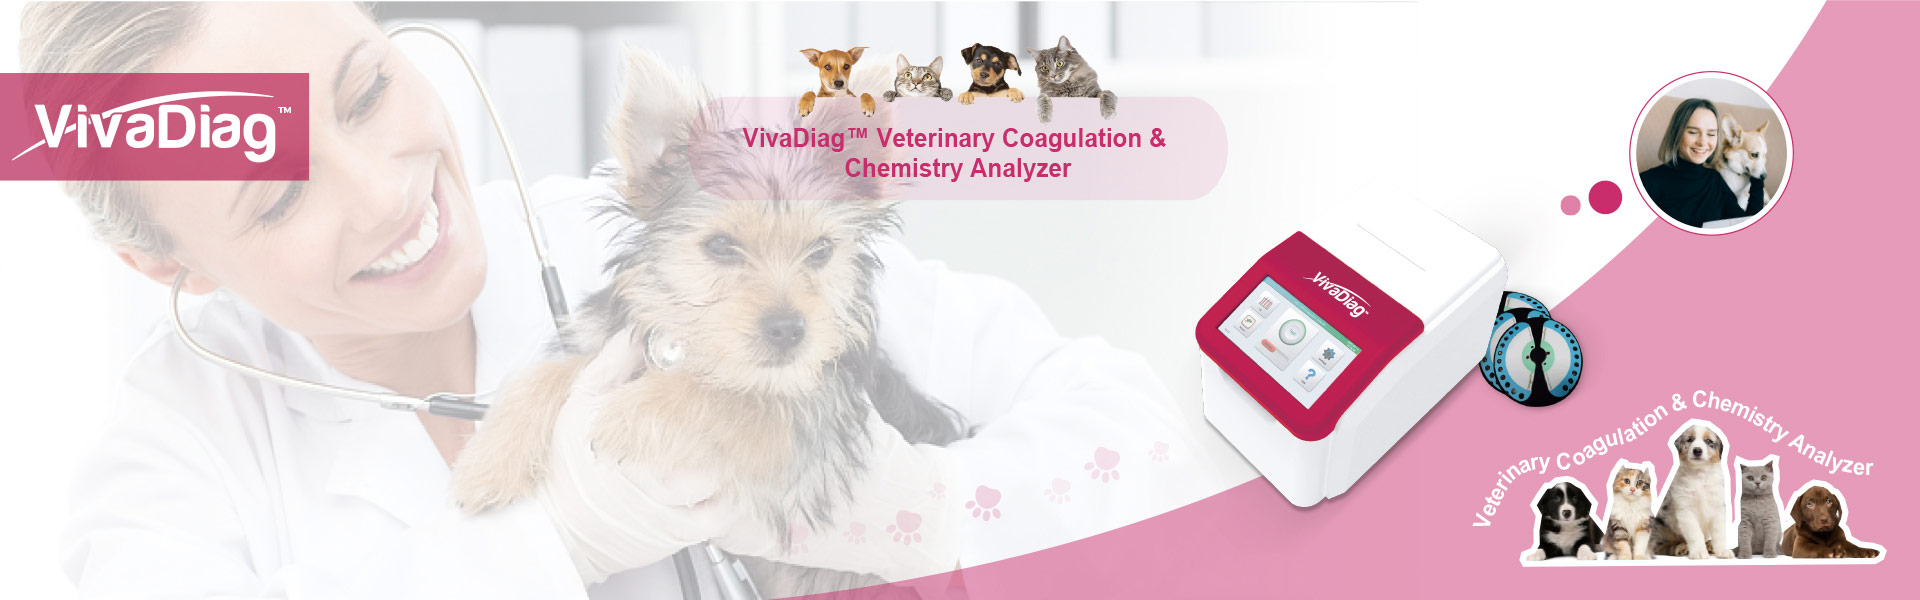 VivaDiag™ Veterinary Coagulation & Chemistry Analyzer